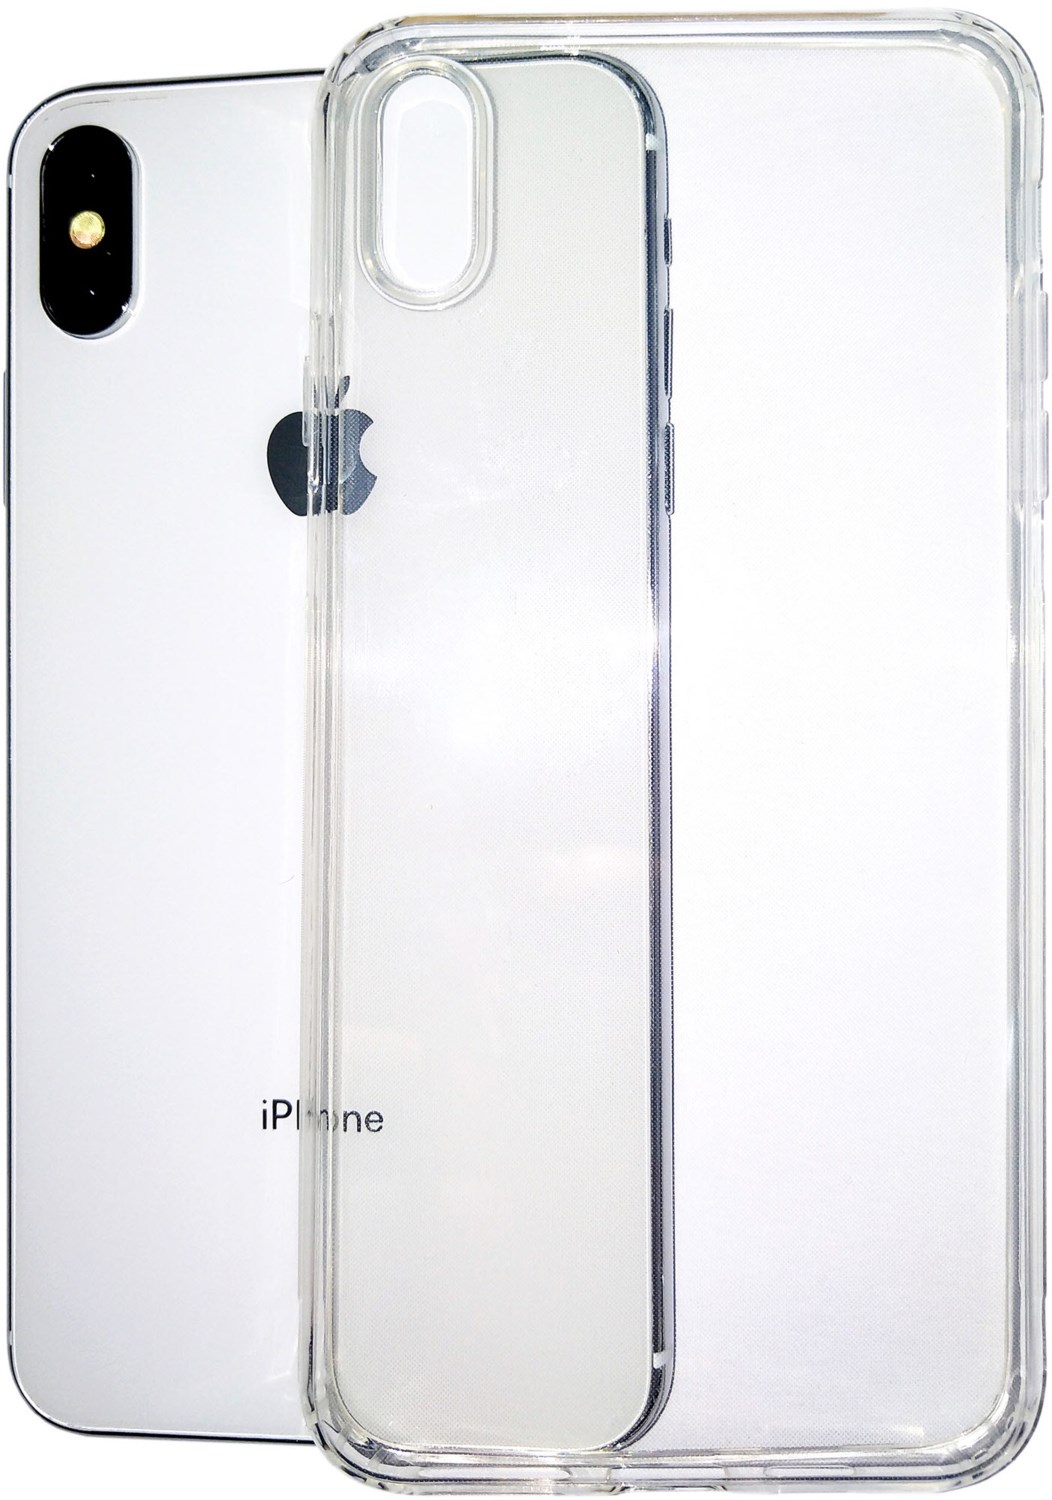 Slim Case für iPhone XS transparent von Felixx Premium